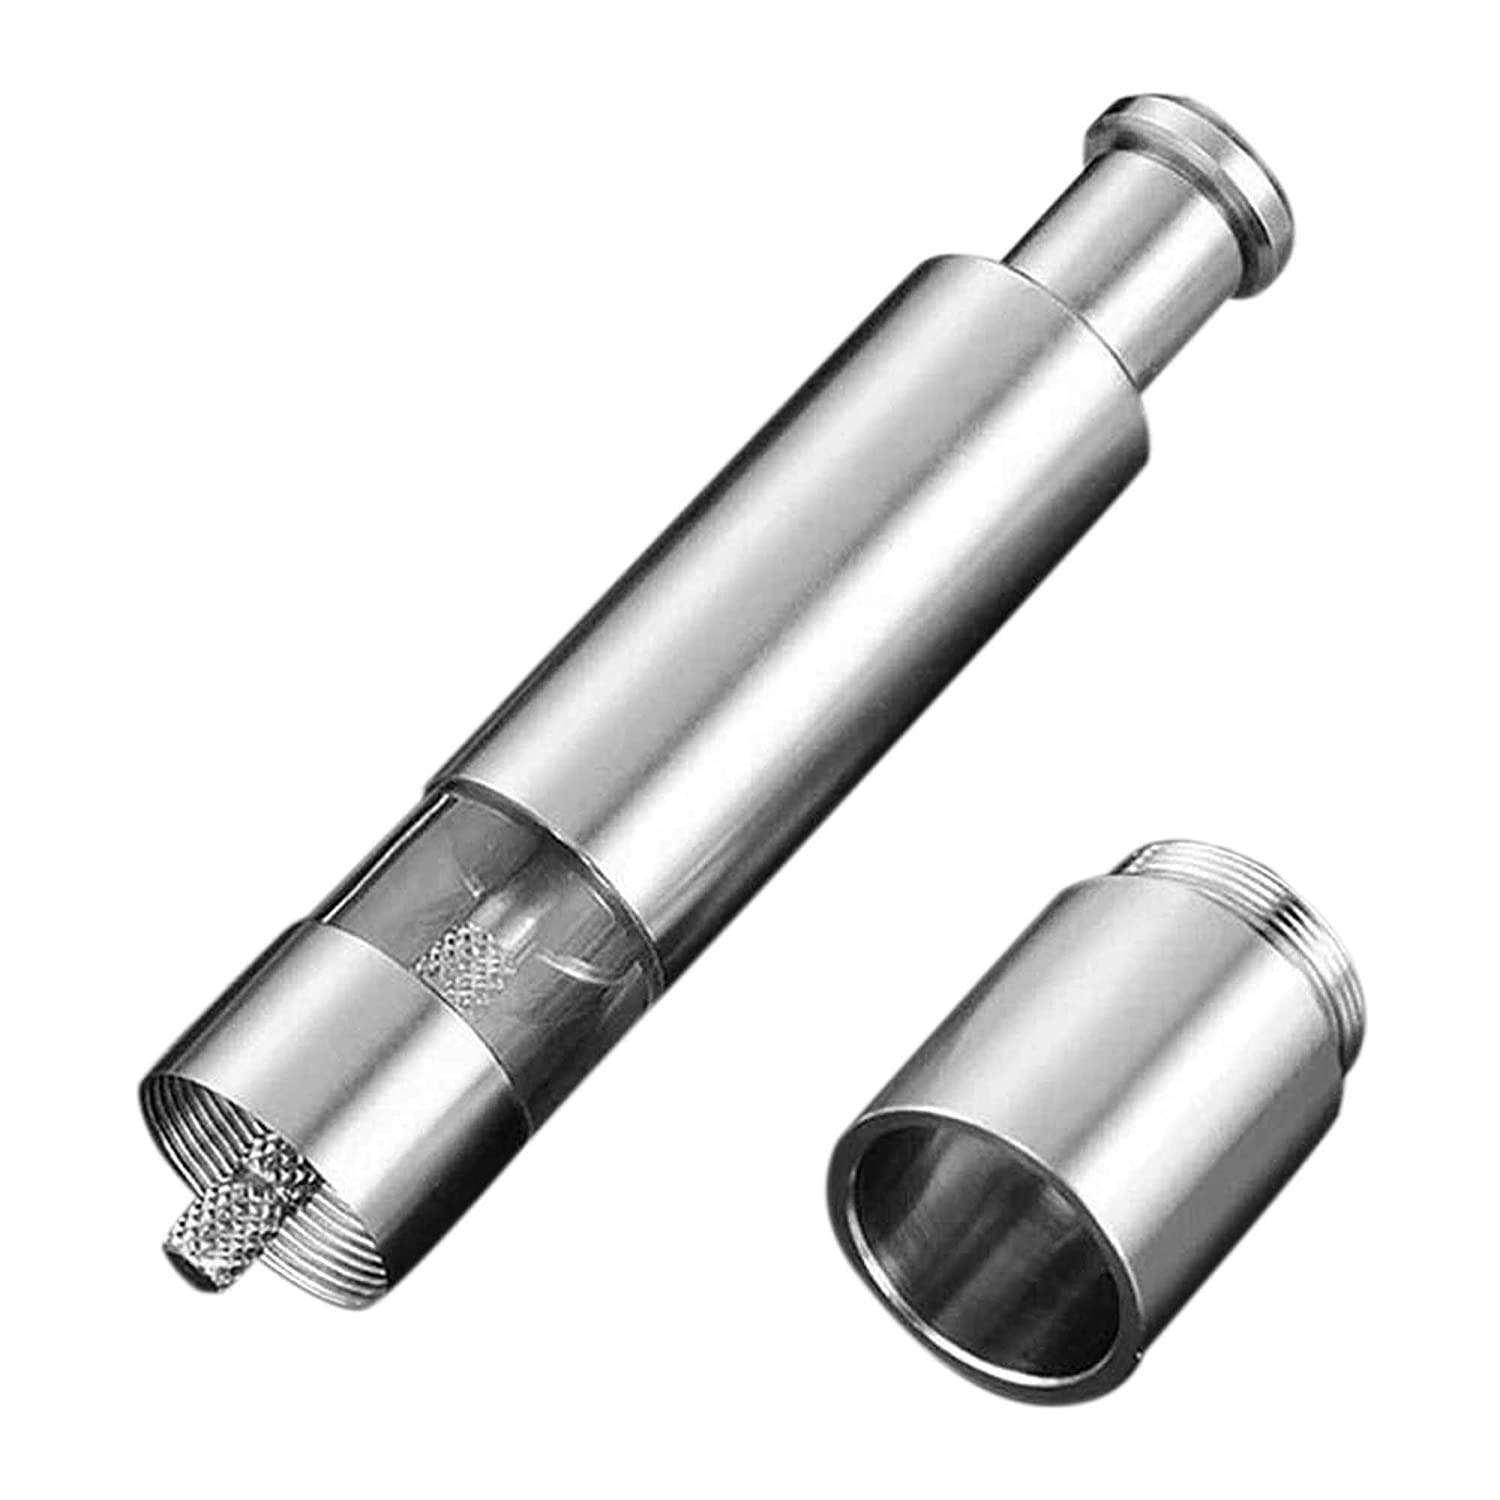 Manual salt and pepper grinder in silver